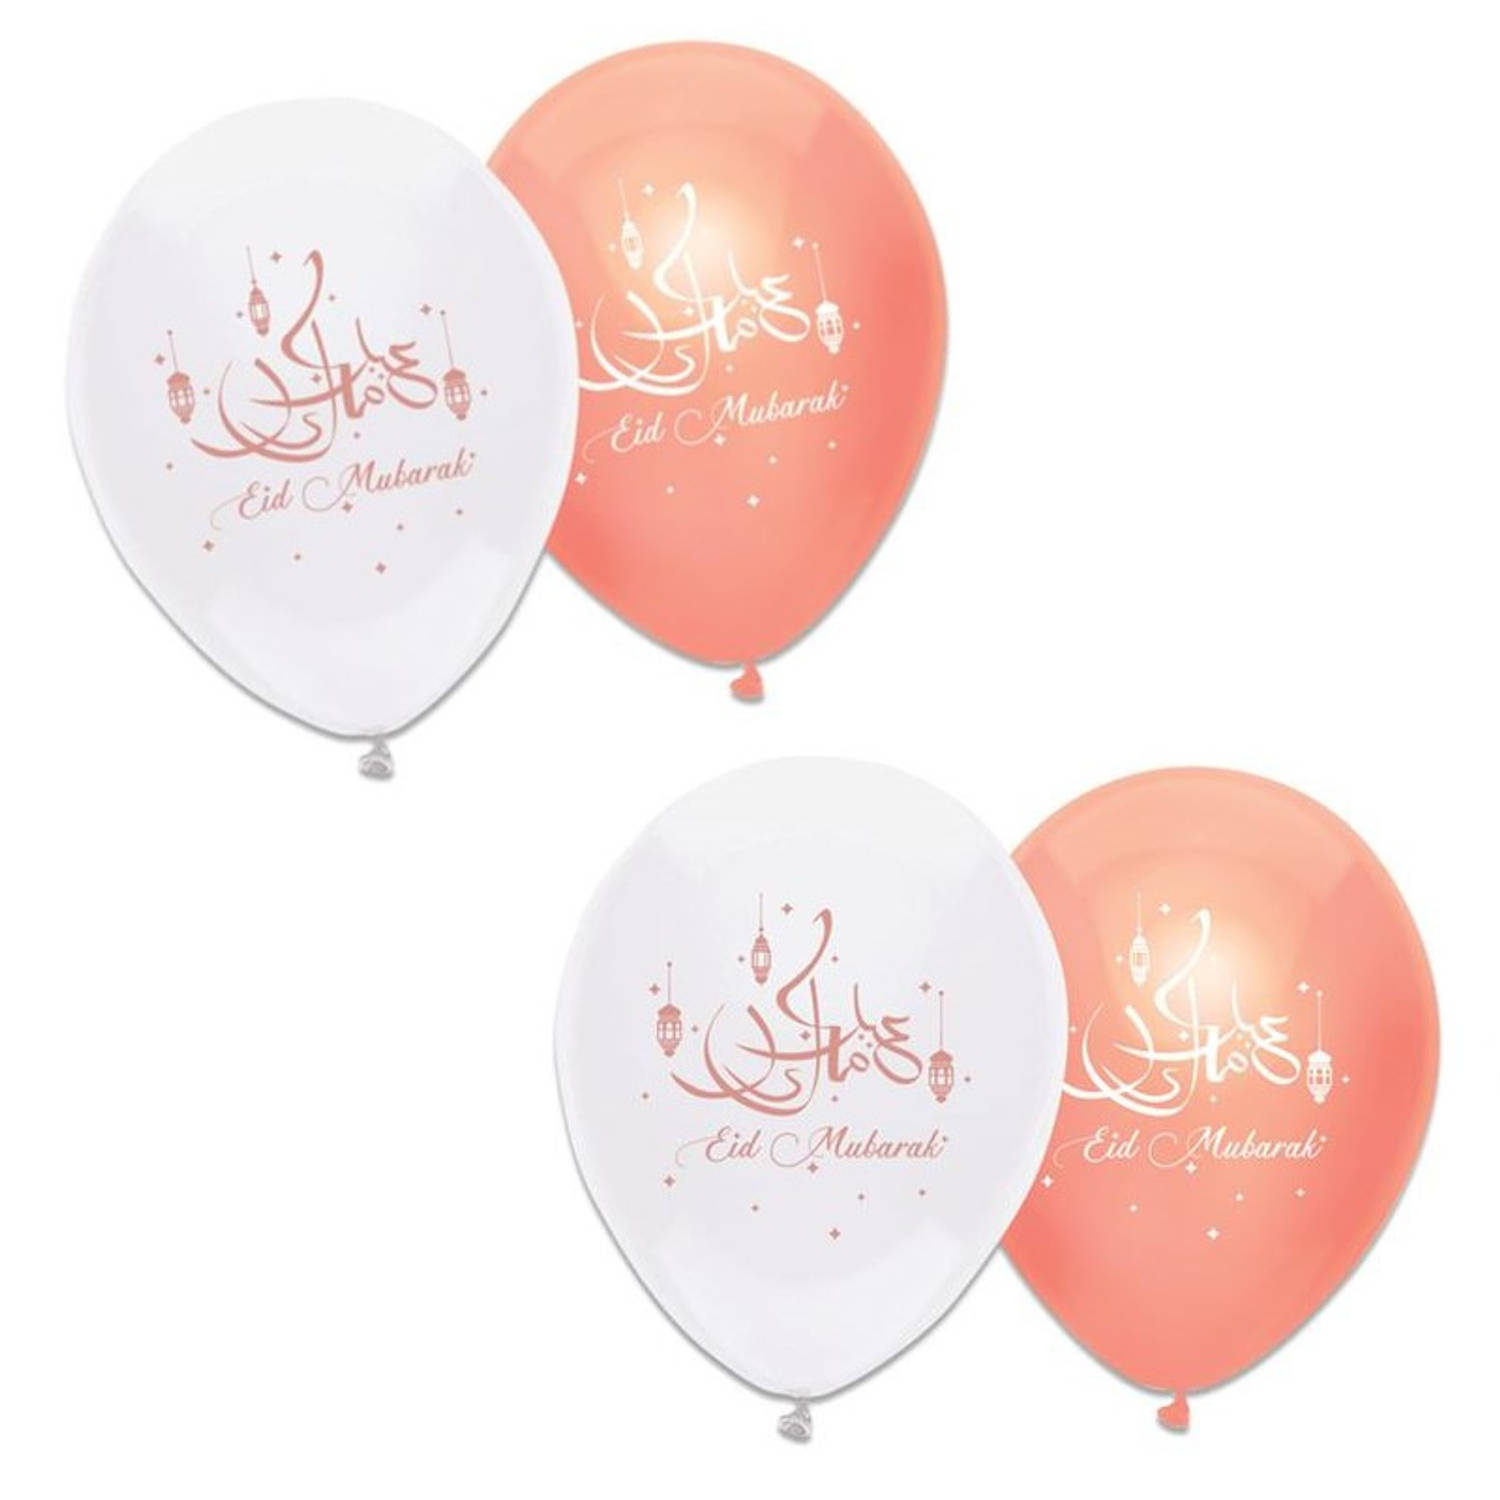 6x stuks Suikerfeest/offerfeest versiering metallic ballonnen wit/roze 30 cm - Ballonnen